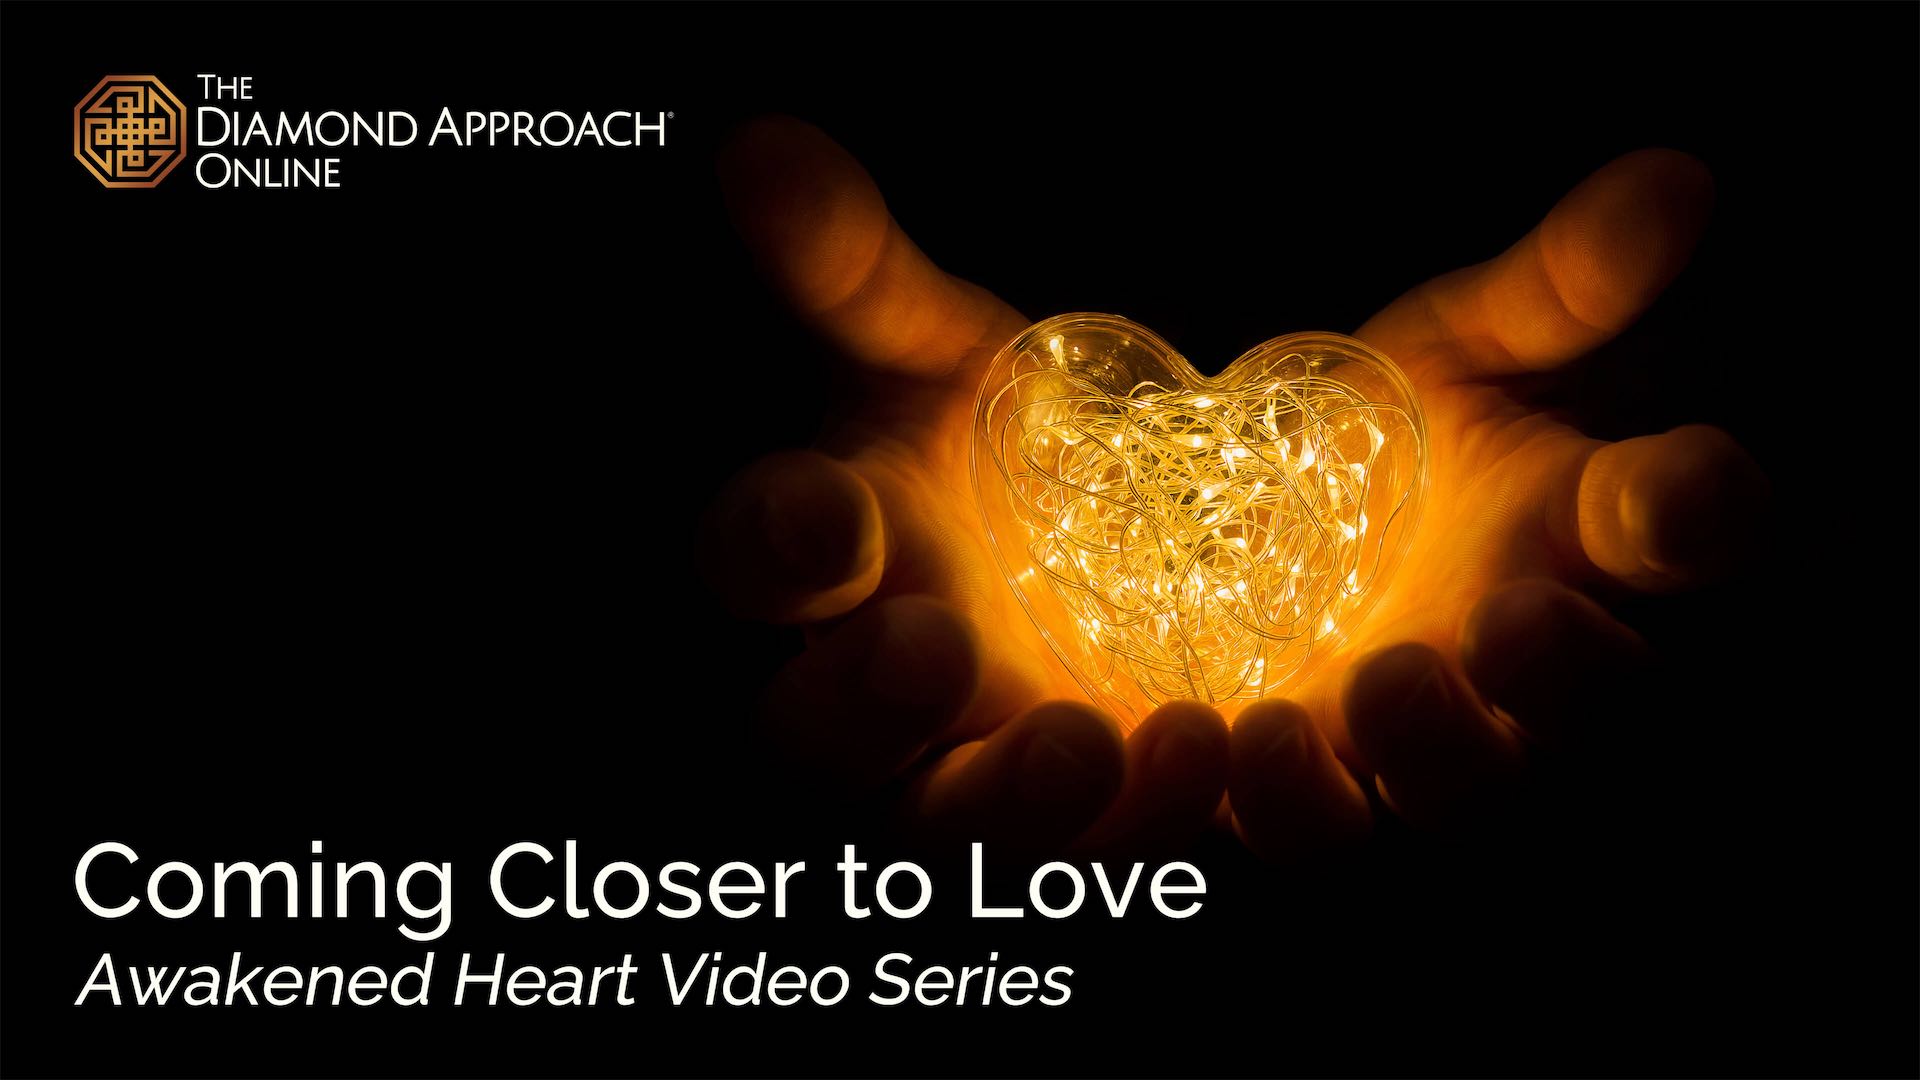 How do we come closer to love?